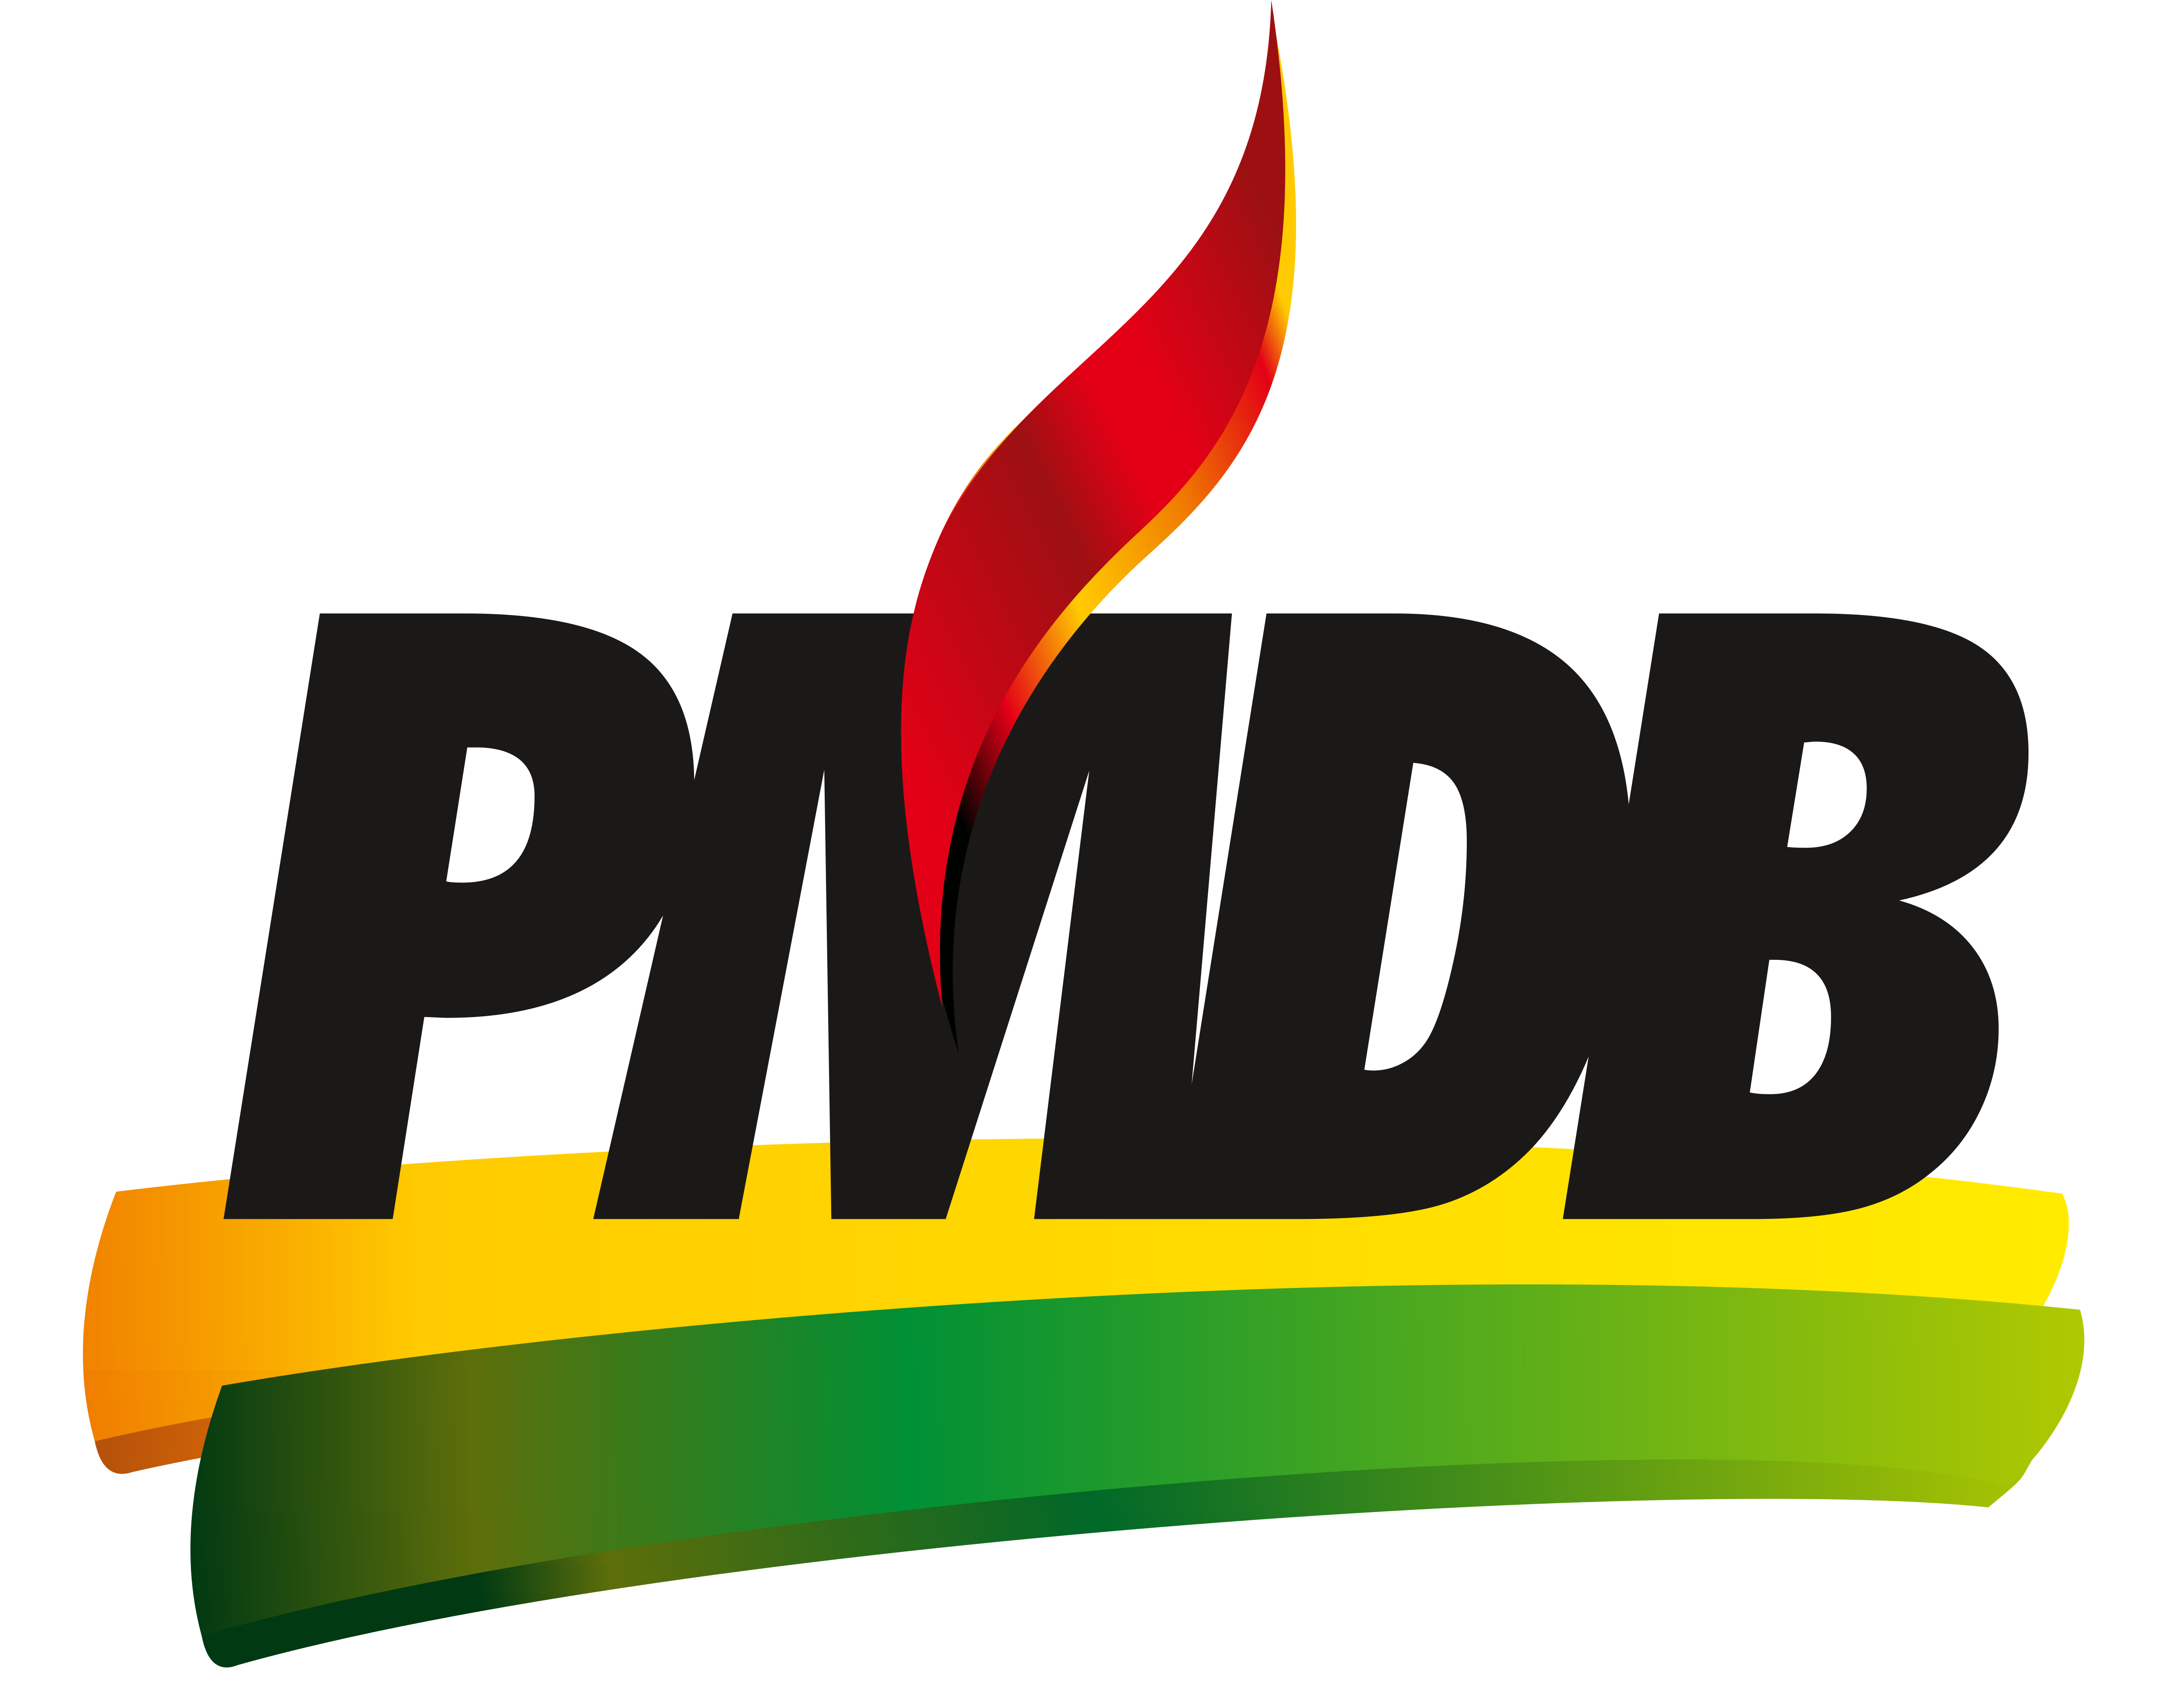 pmdb logo.